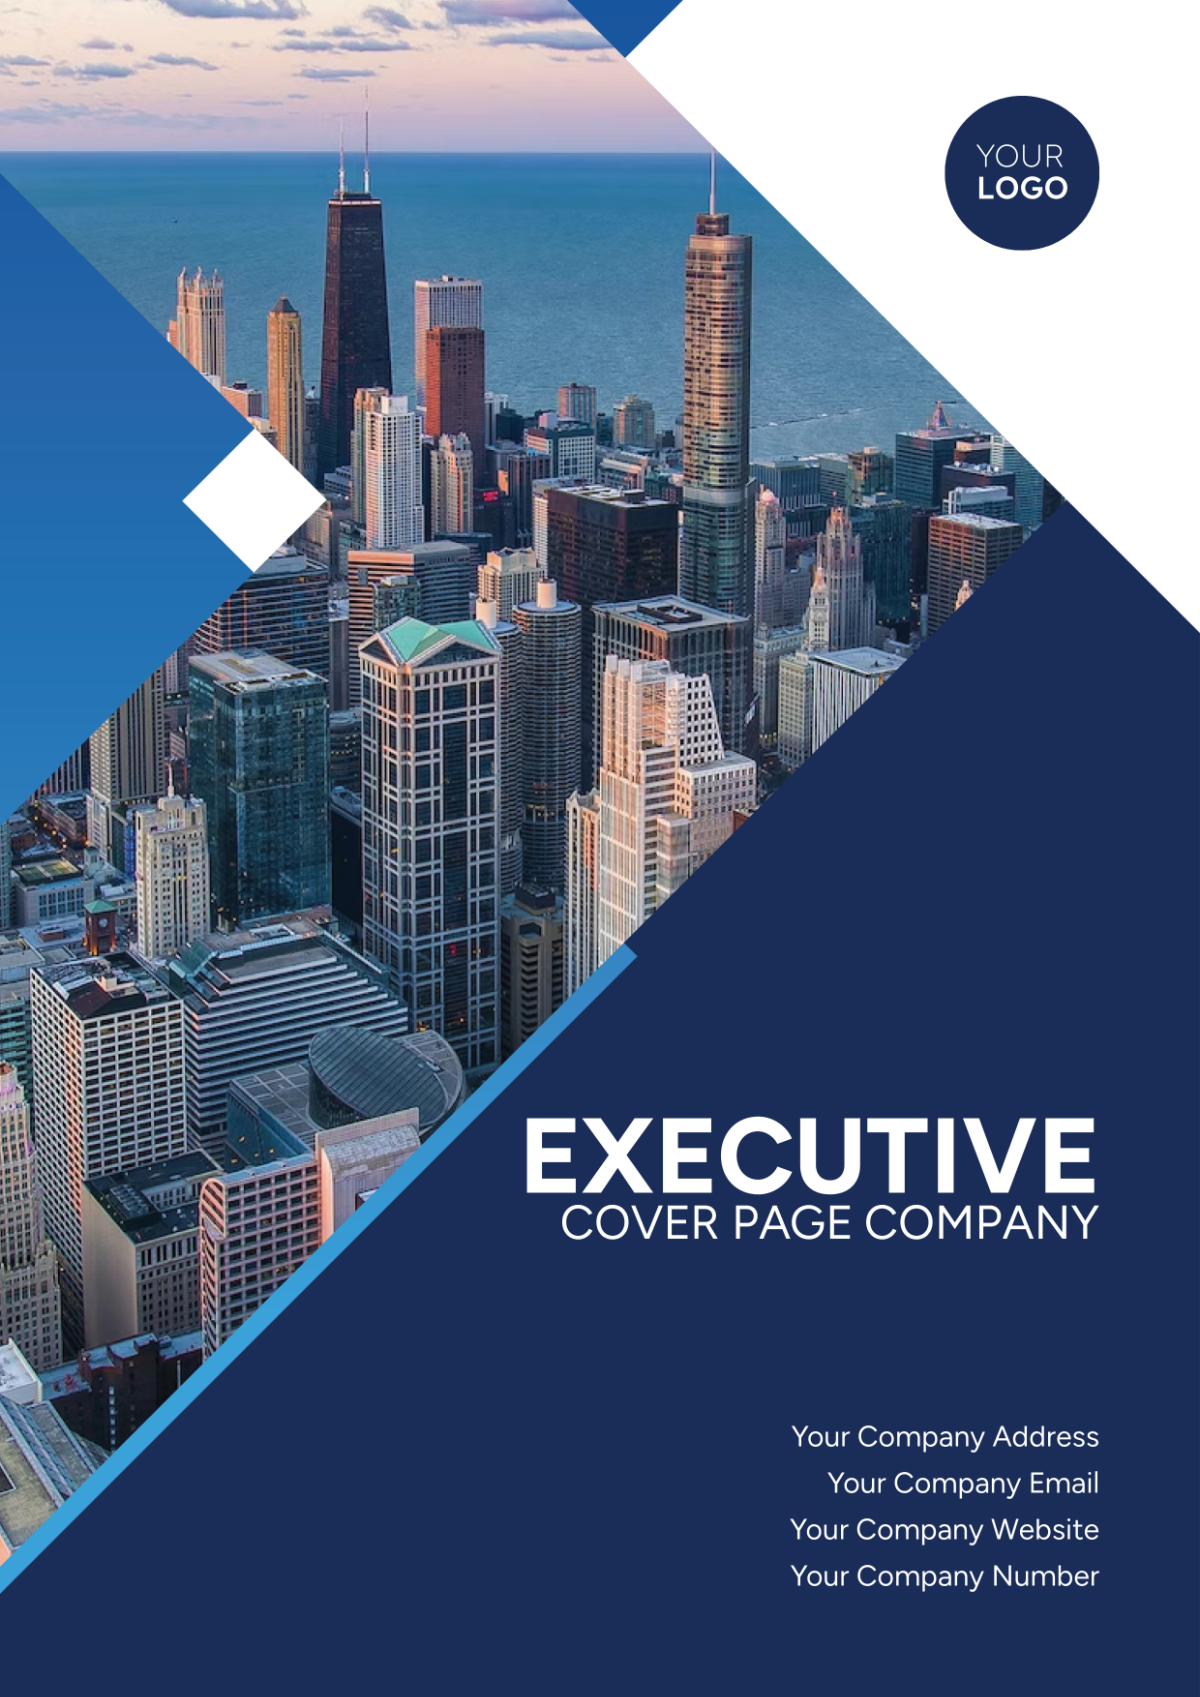 Executive Cover Page Company